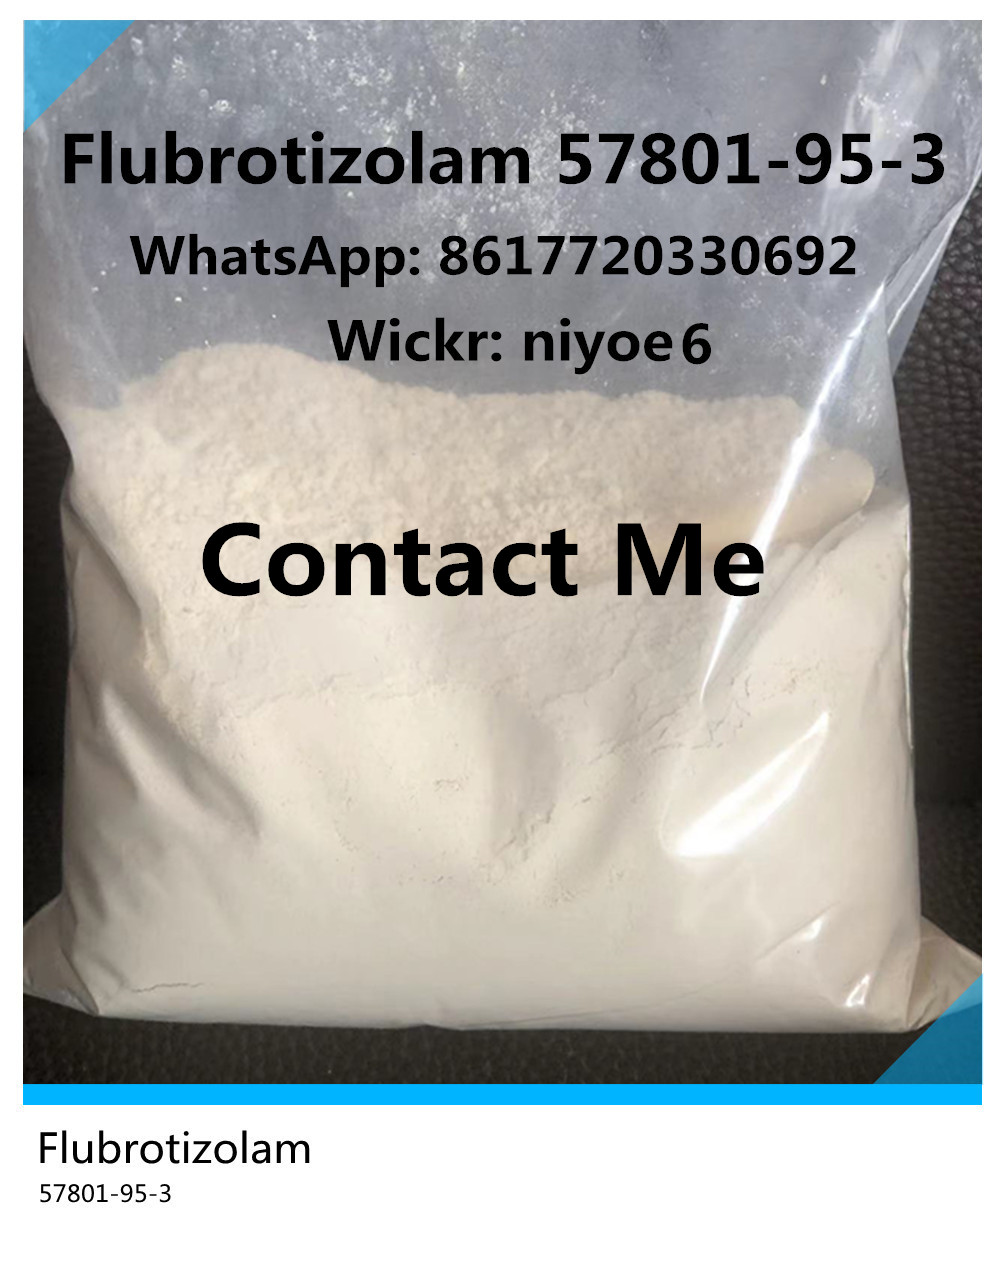 Premium Quality Benzo Manufacturer Flubrotizolam Powder 57801-95-3 Wickr: niyoe6